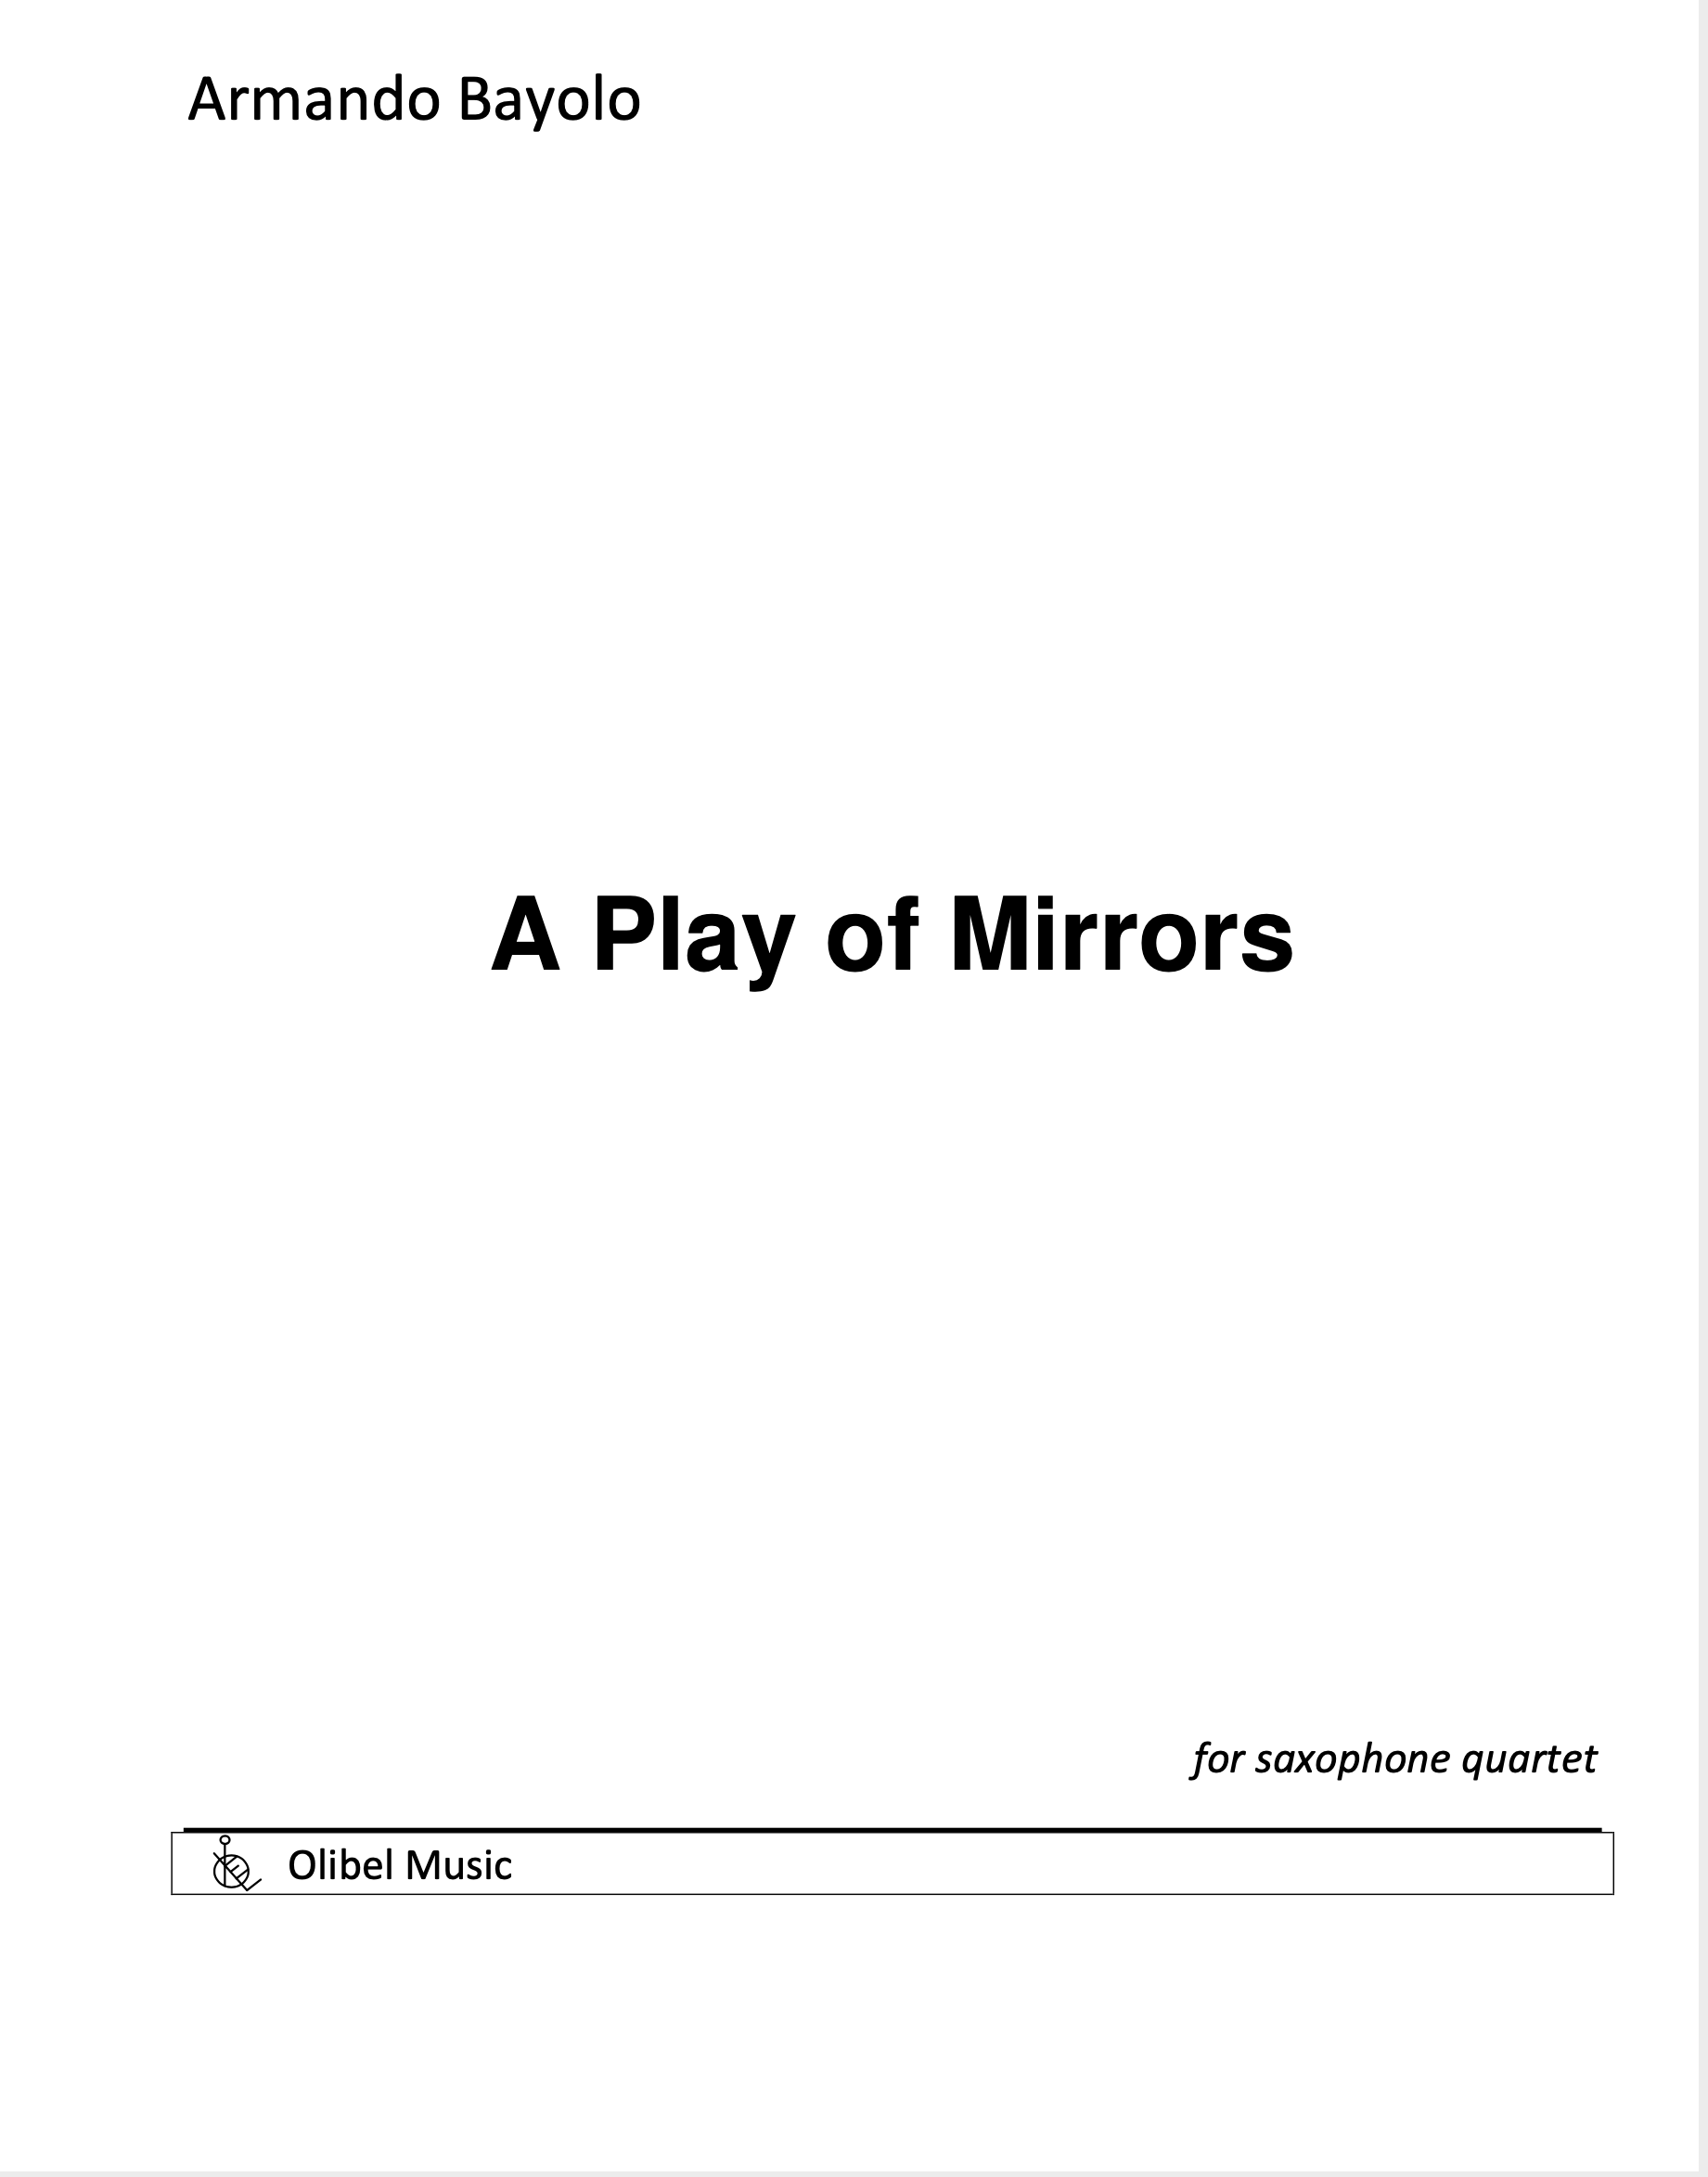 A Play Of Mirrors by Armando Bayolo